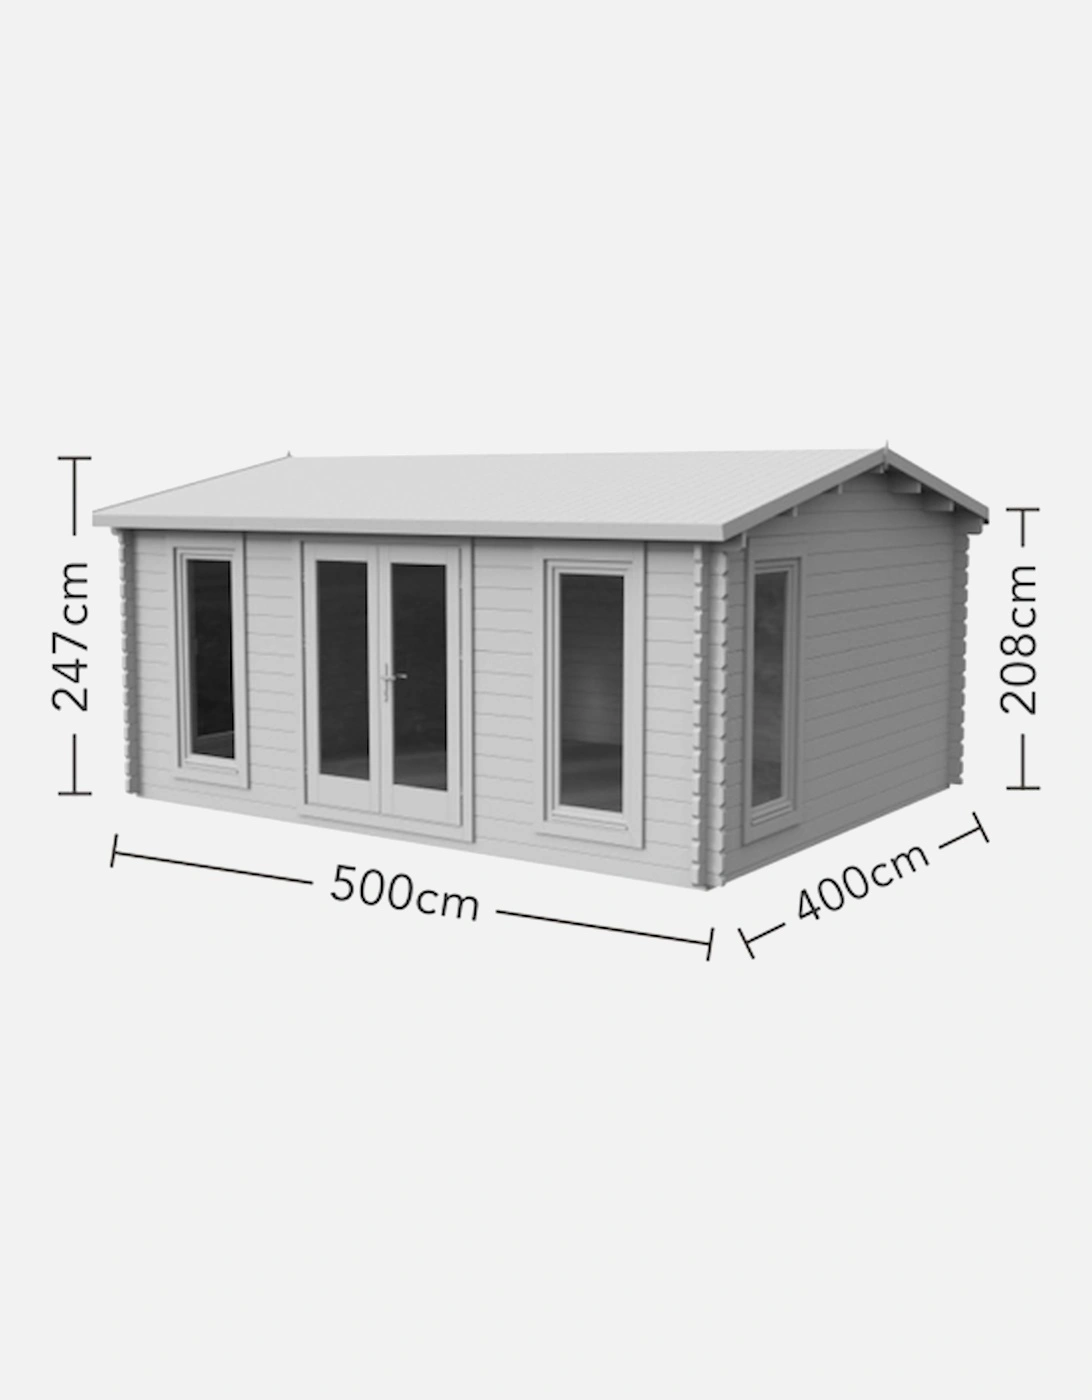 Garden Rushock 5.0m x 4.0m Log Cabin - Apex Roof Double Glazed with Felt Shingles Plus Underlay